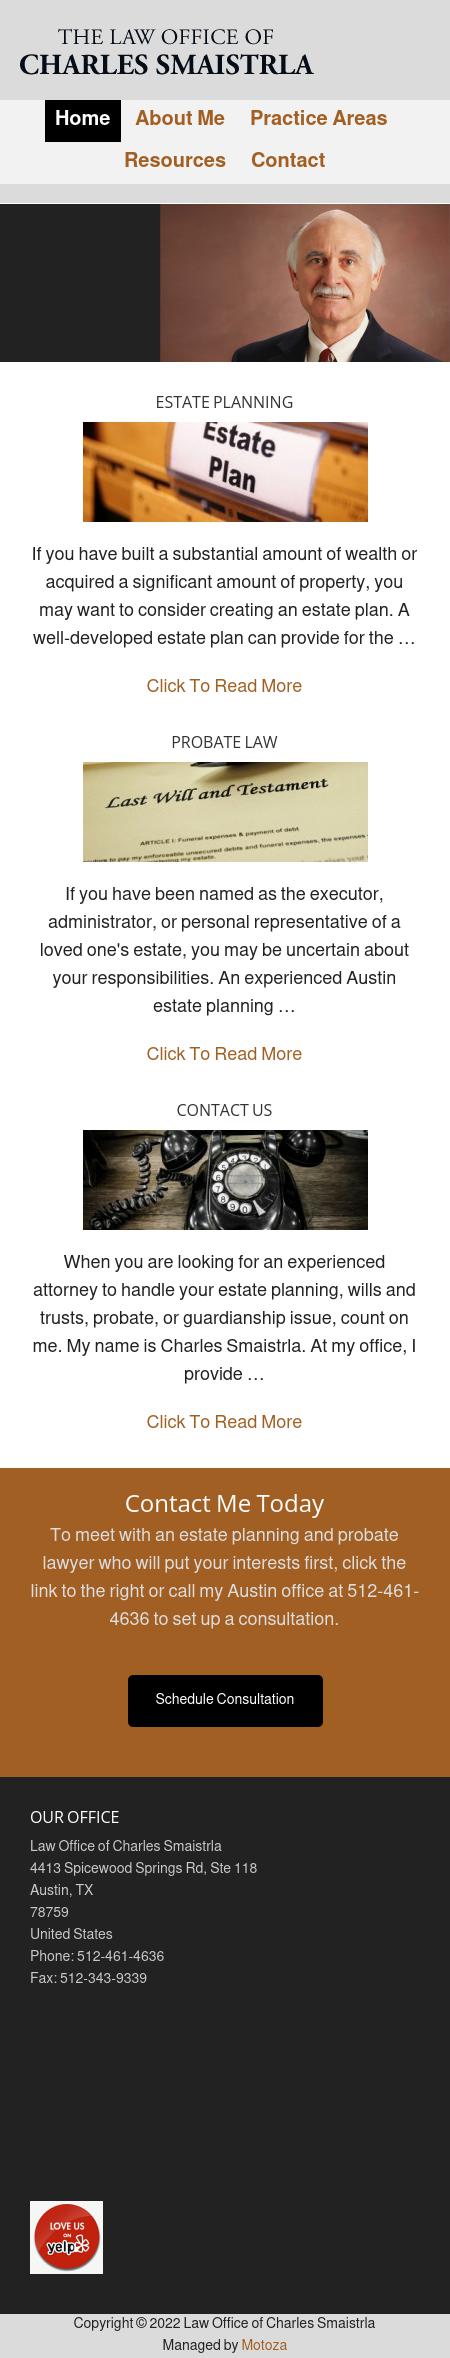 Law Office of Charles Smaistrla - Austin TX Lawyers